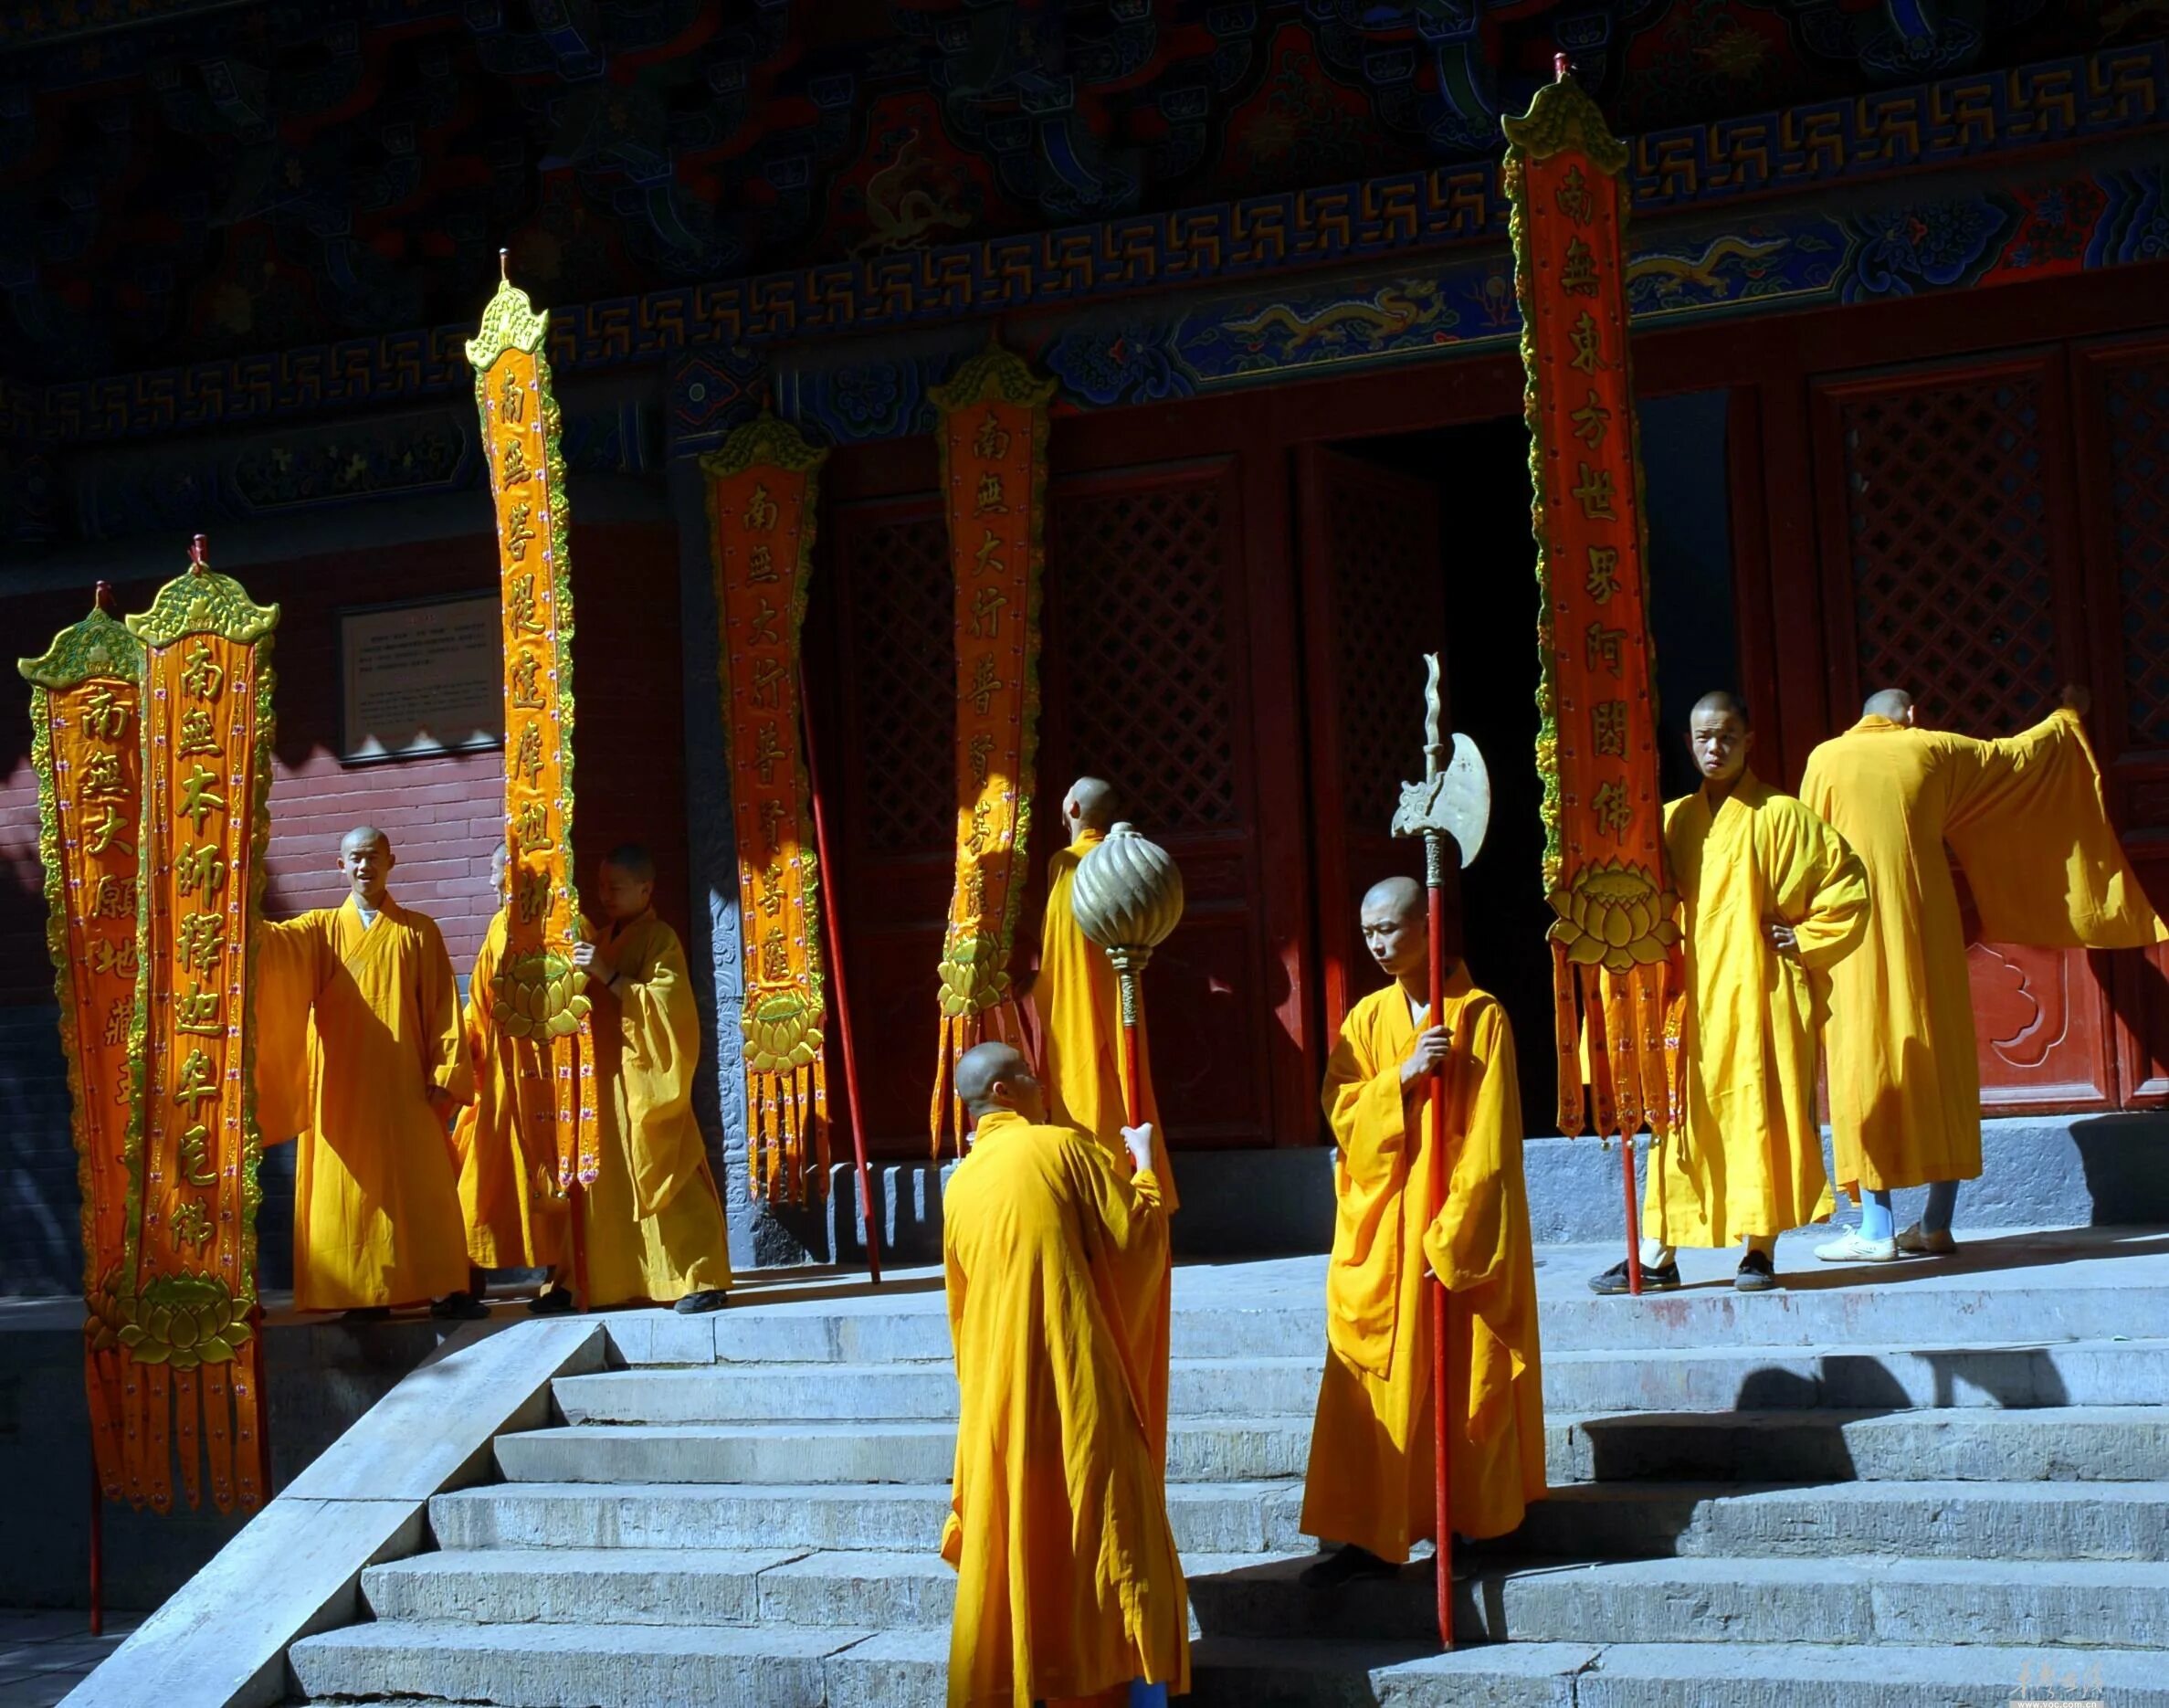 Shaolin temple. Монастырь Шаолинь. Буддийский монастырь Шаолинь. Китай храм Шаолинь. Shaolin Temple Китай.